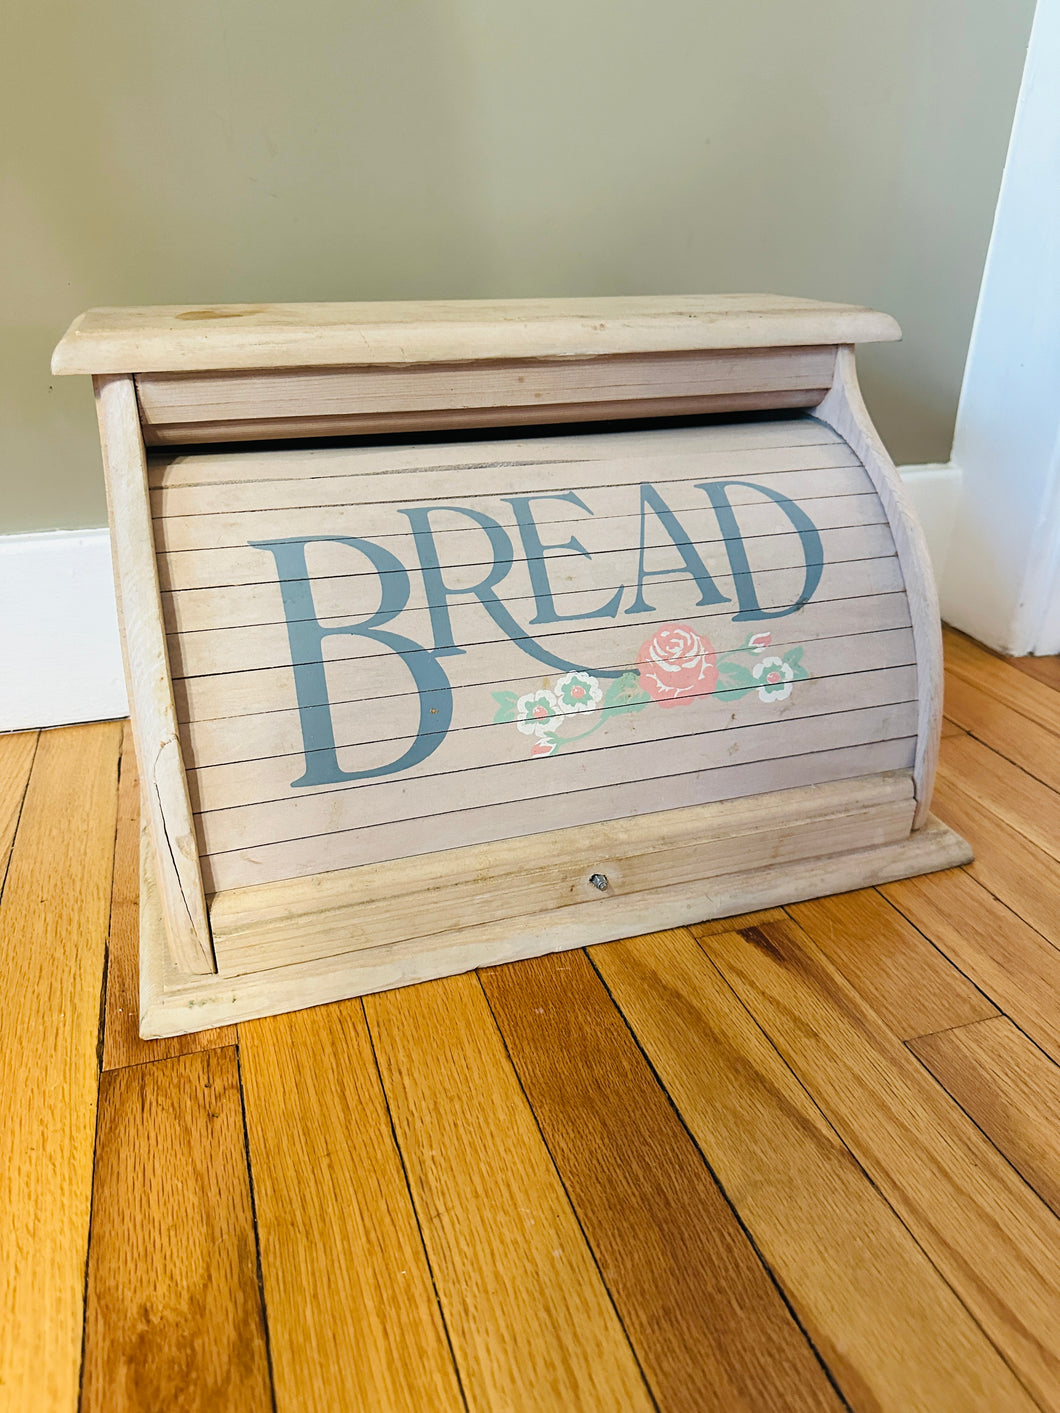 Breadbox- read description